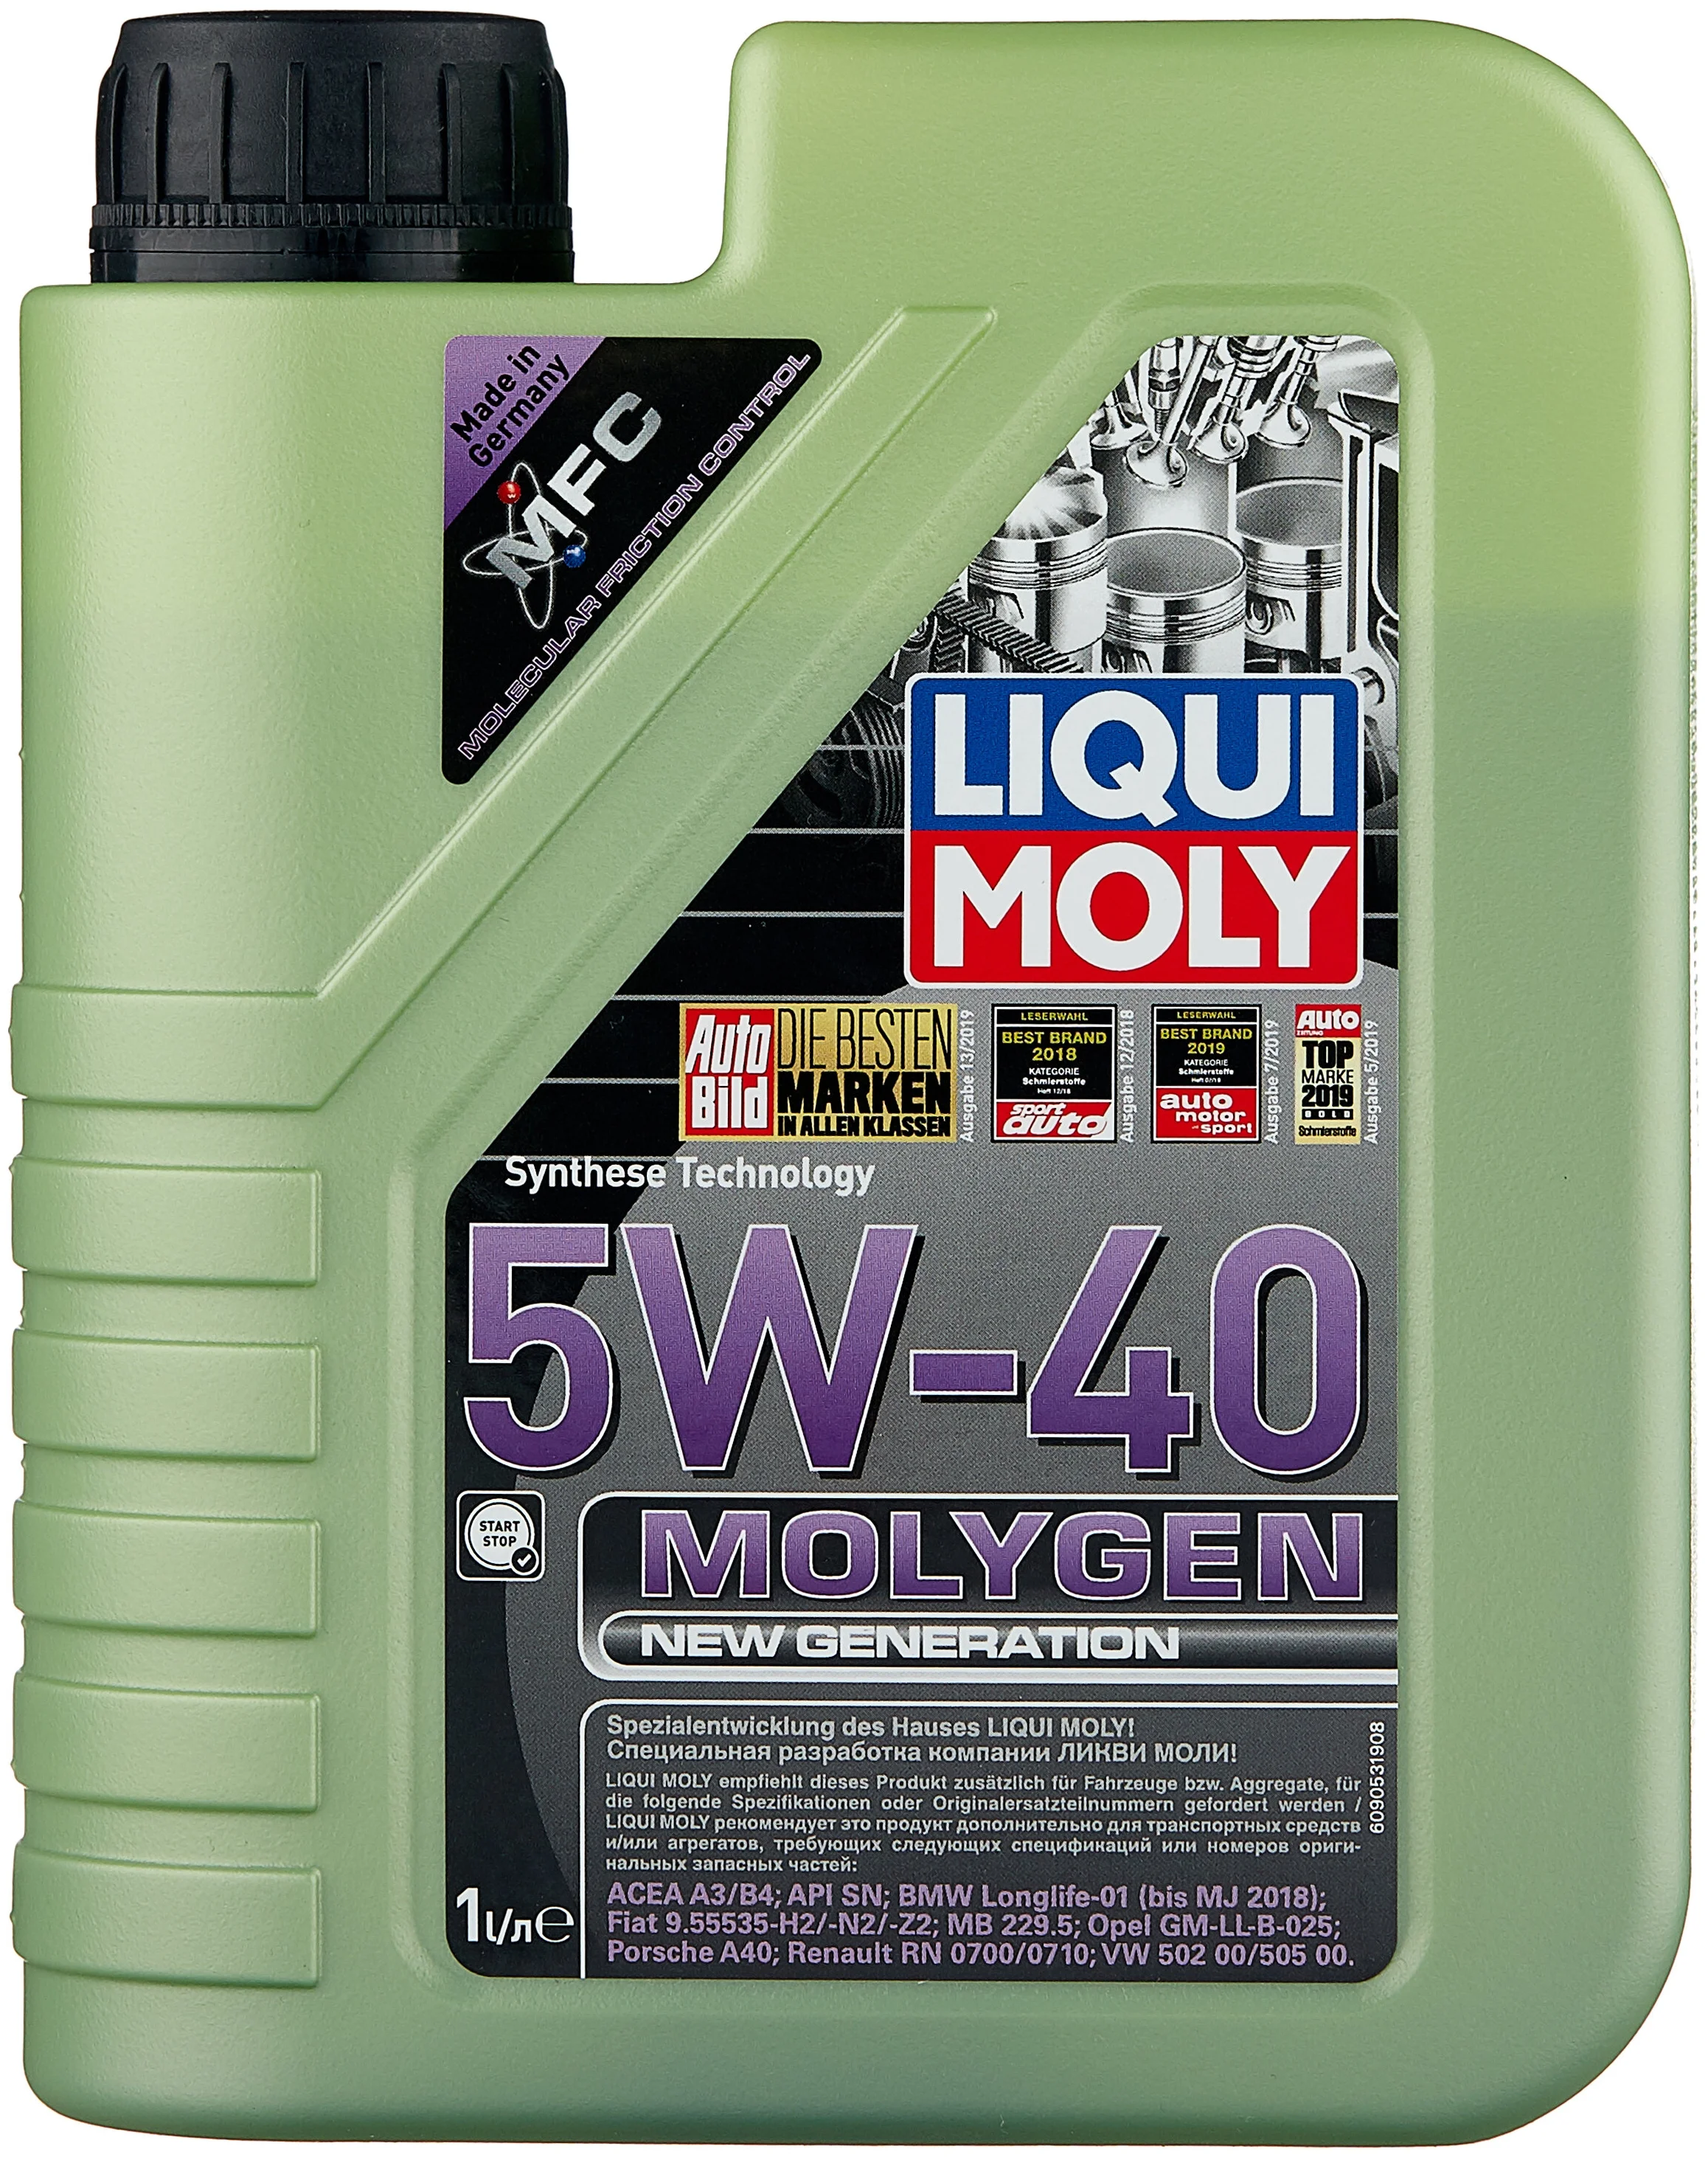 LIQUI MOLY Molygen New Generation 5W-40 - класс вязкости: 5W-40